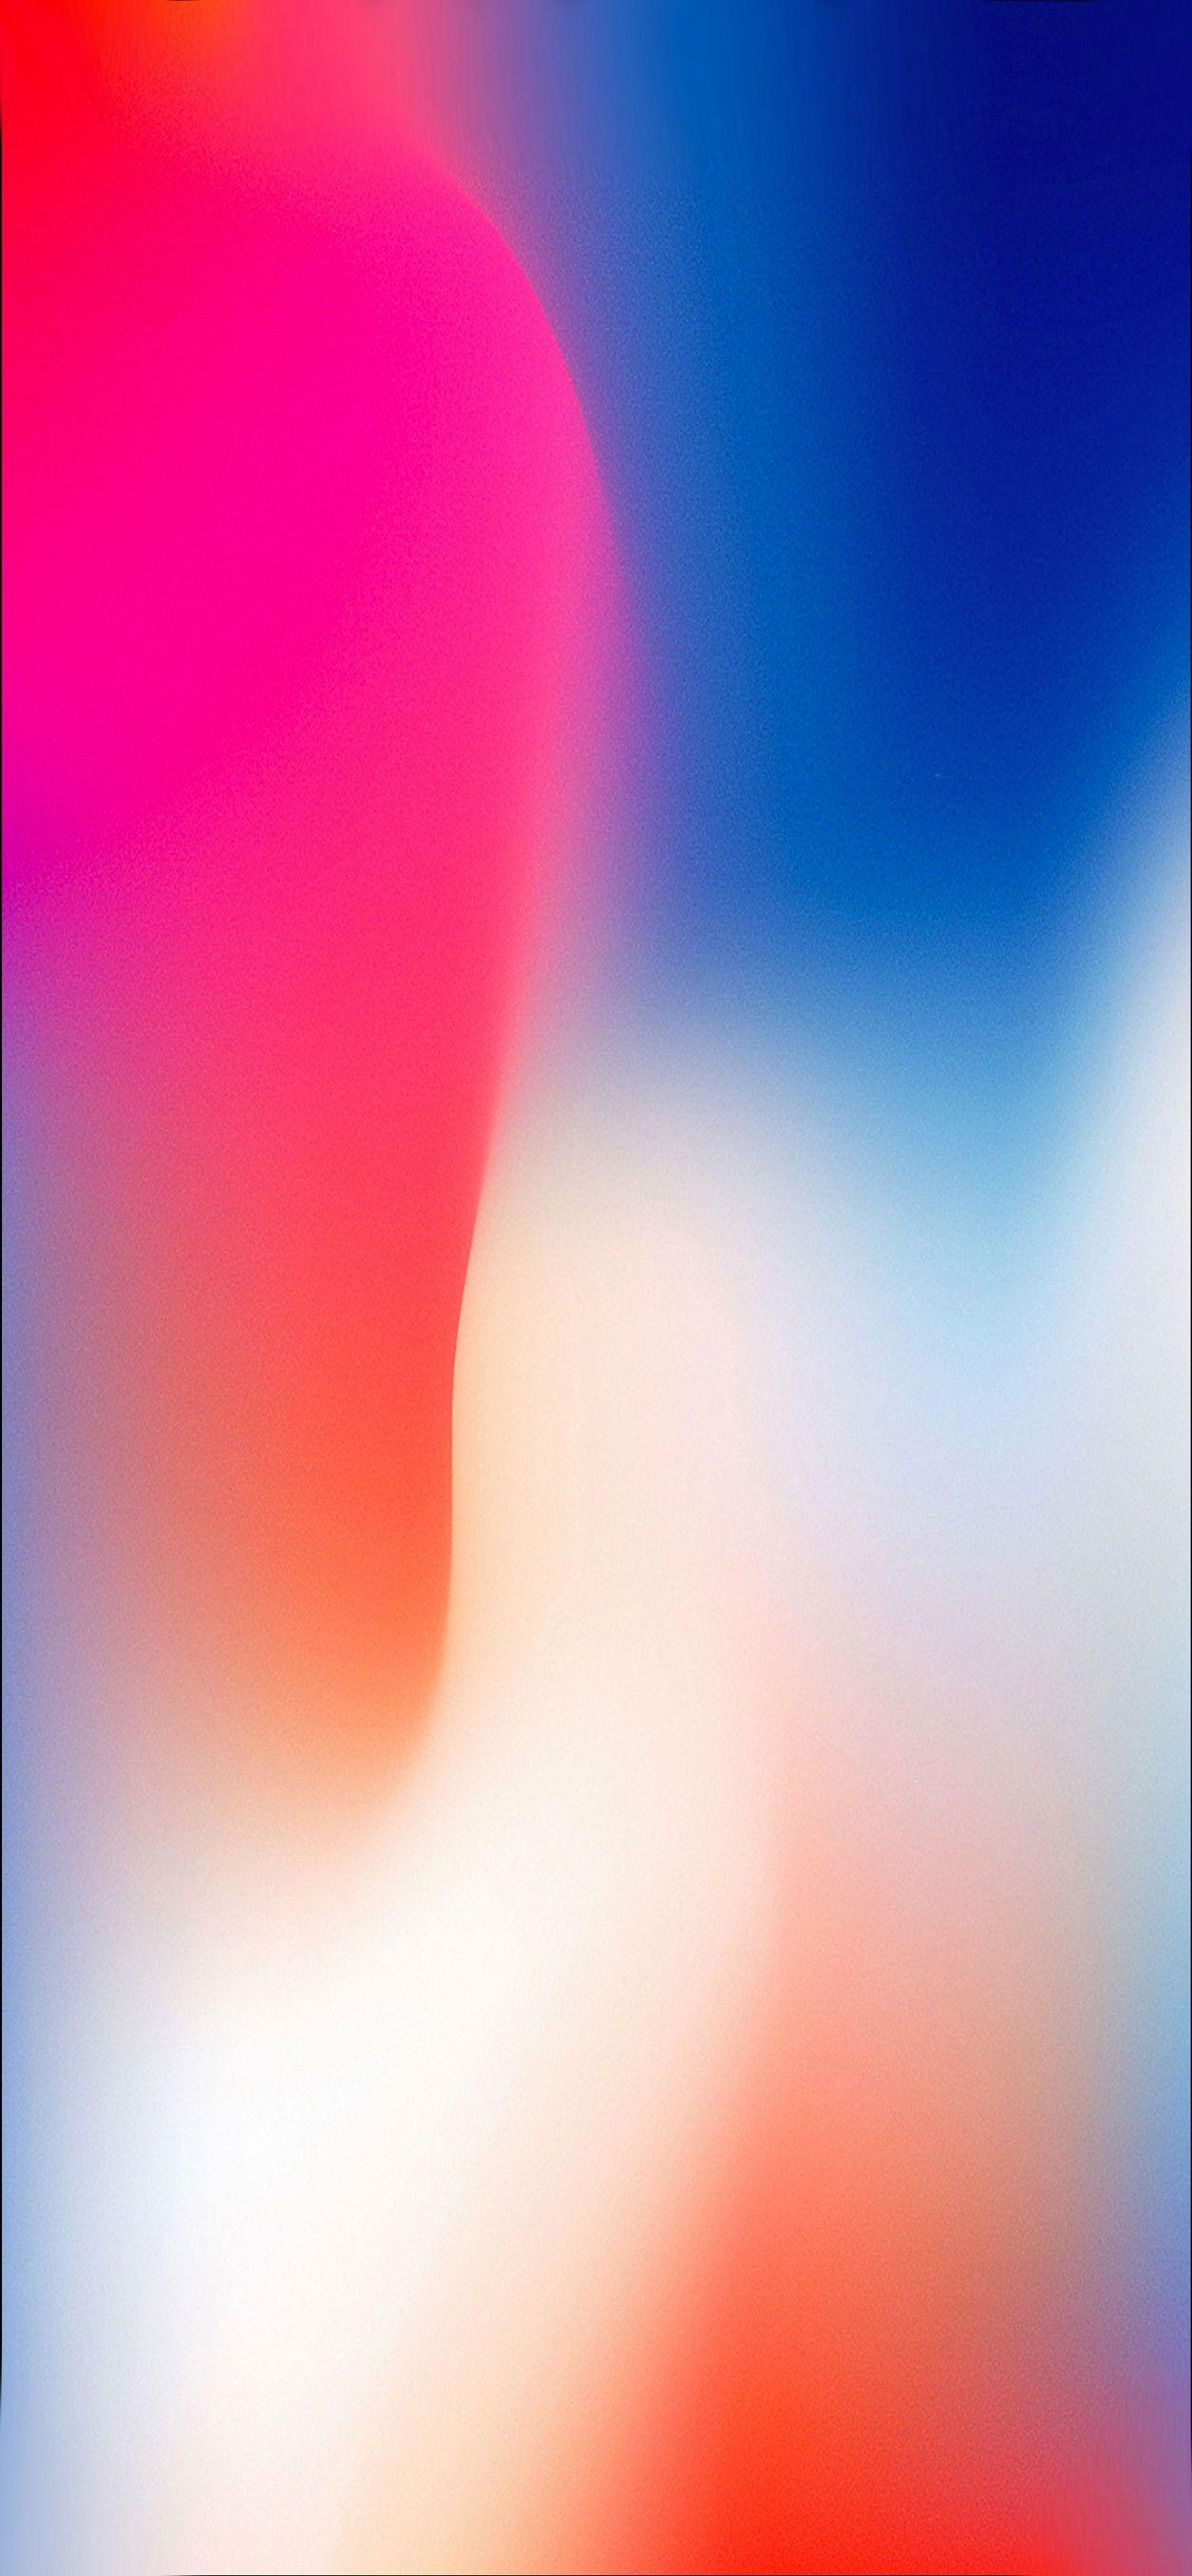 iPhone X wallpaper. Bilder di 2019. Wallpaper iphone